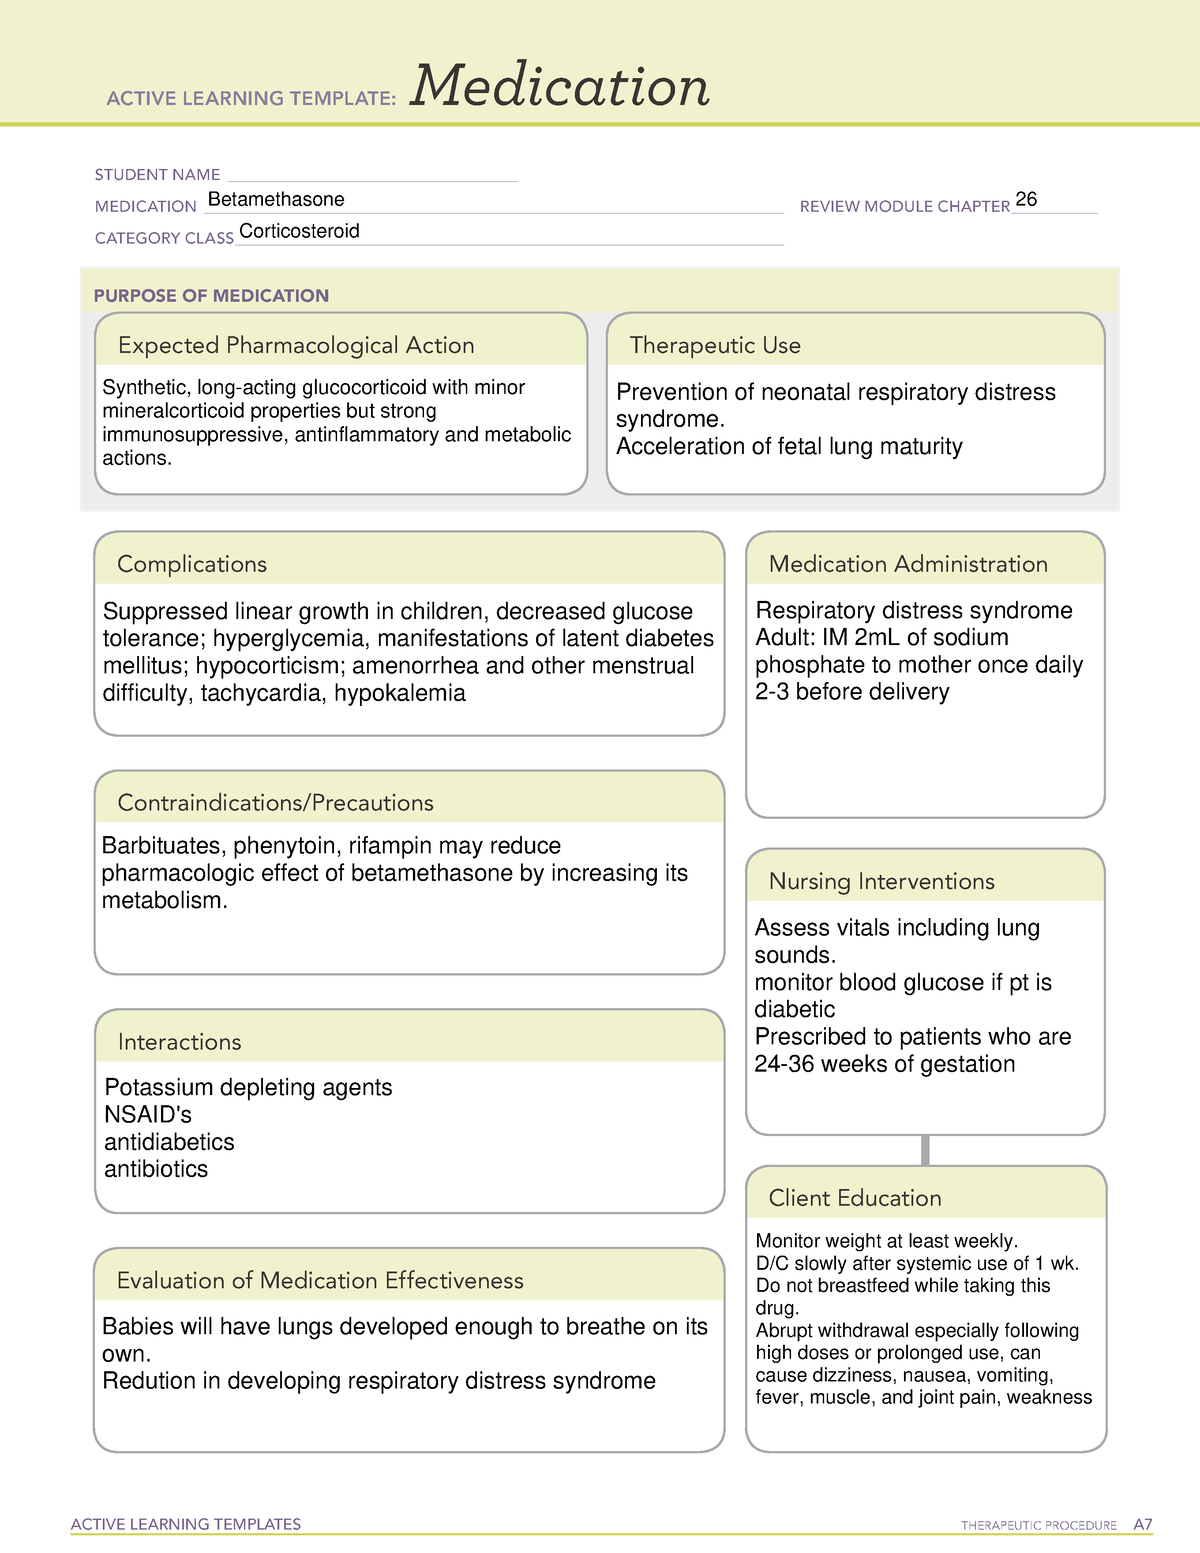 betamethasone-medication-template-active-learning-templates